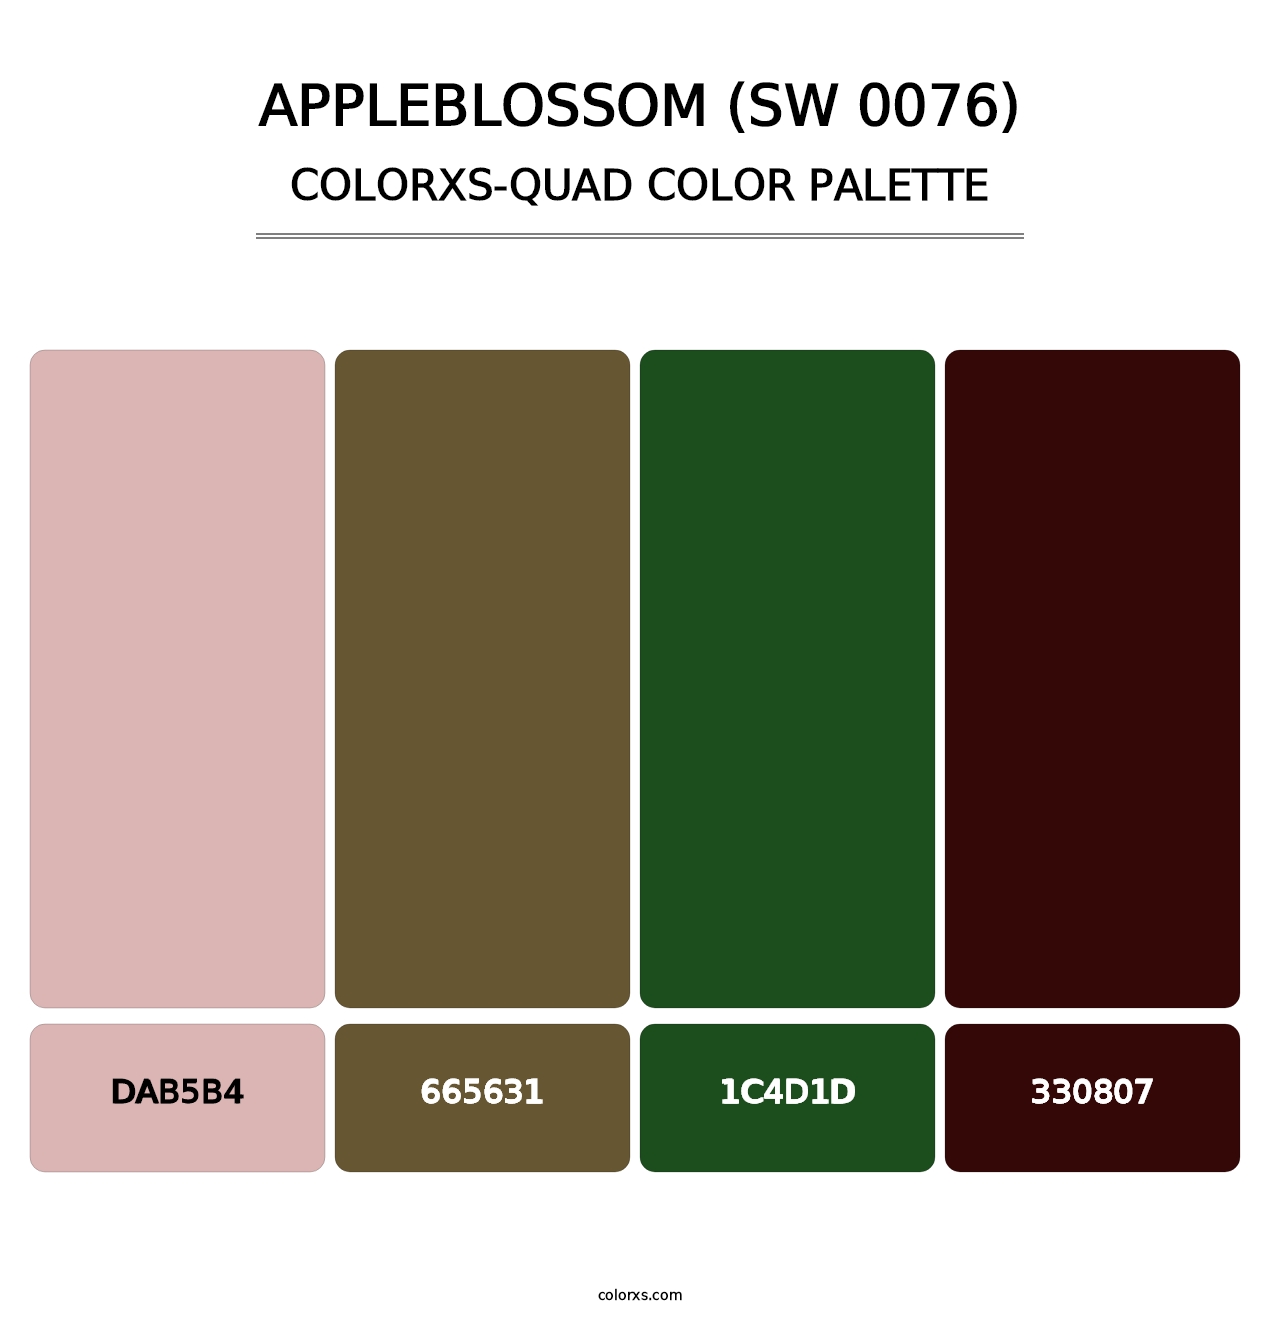 Appleblossom (SW 0076) - Colorxs Quad Palette